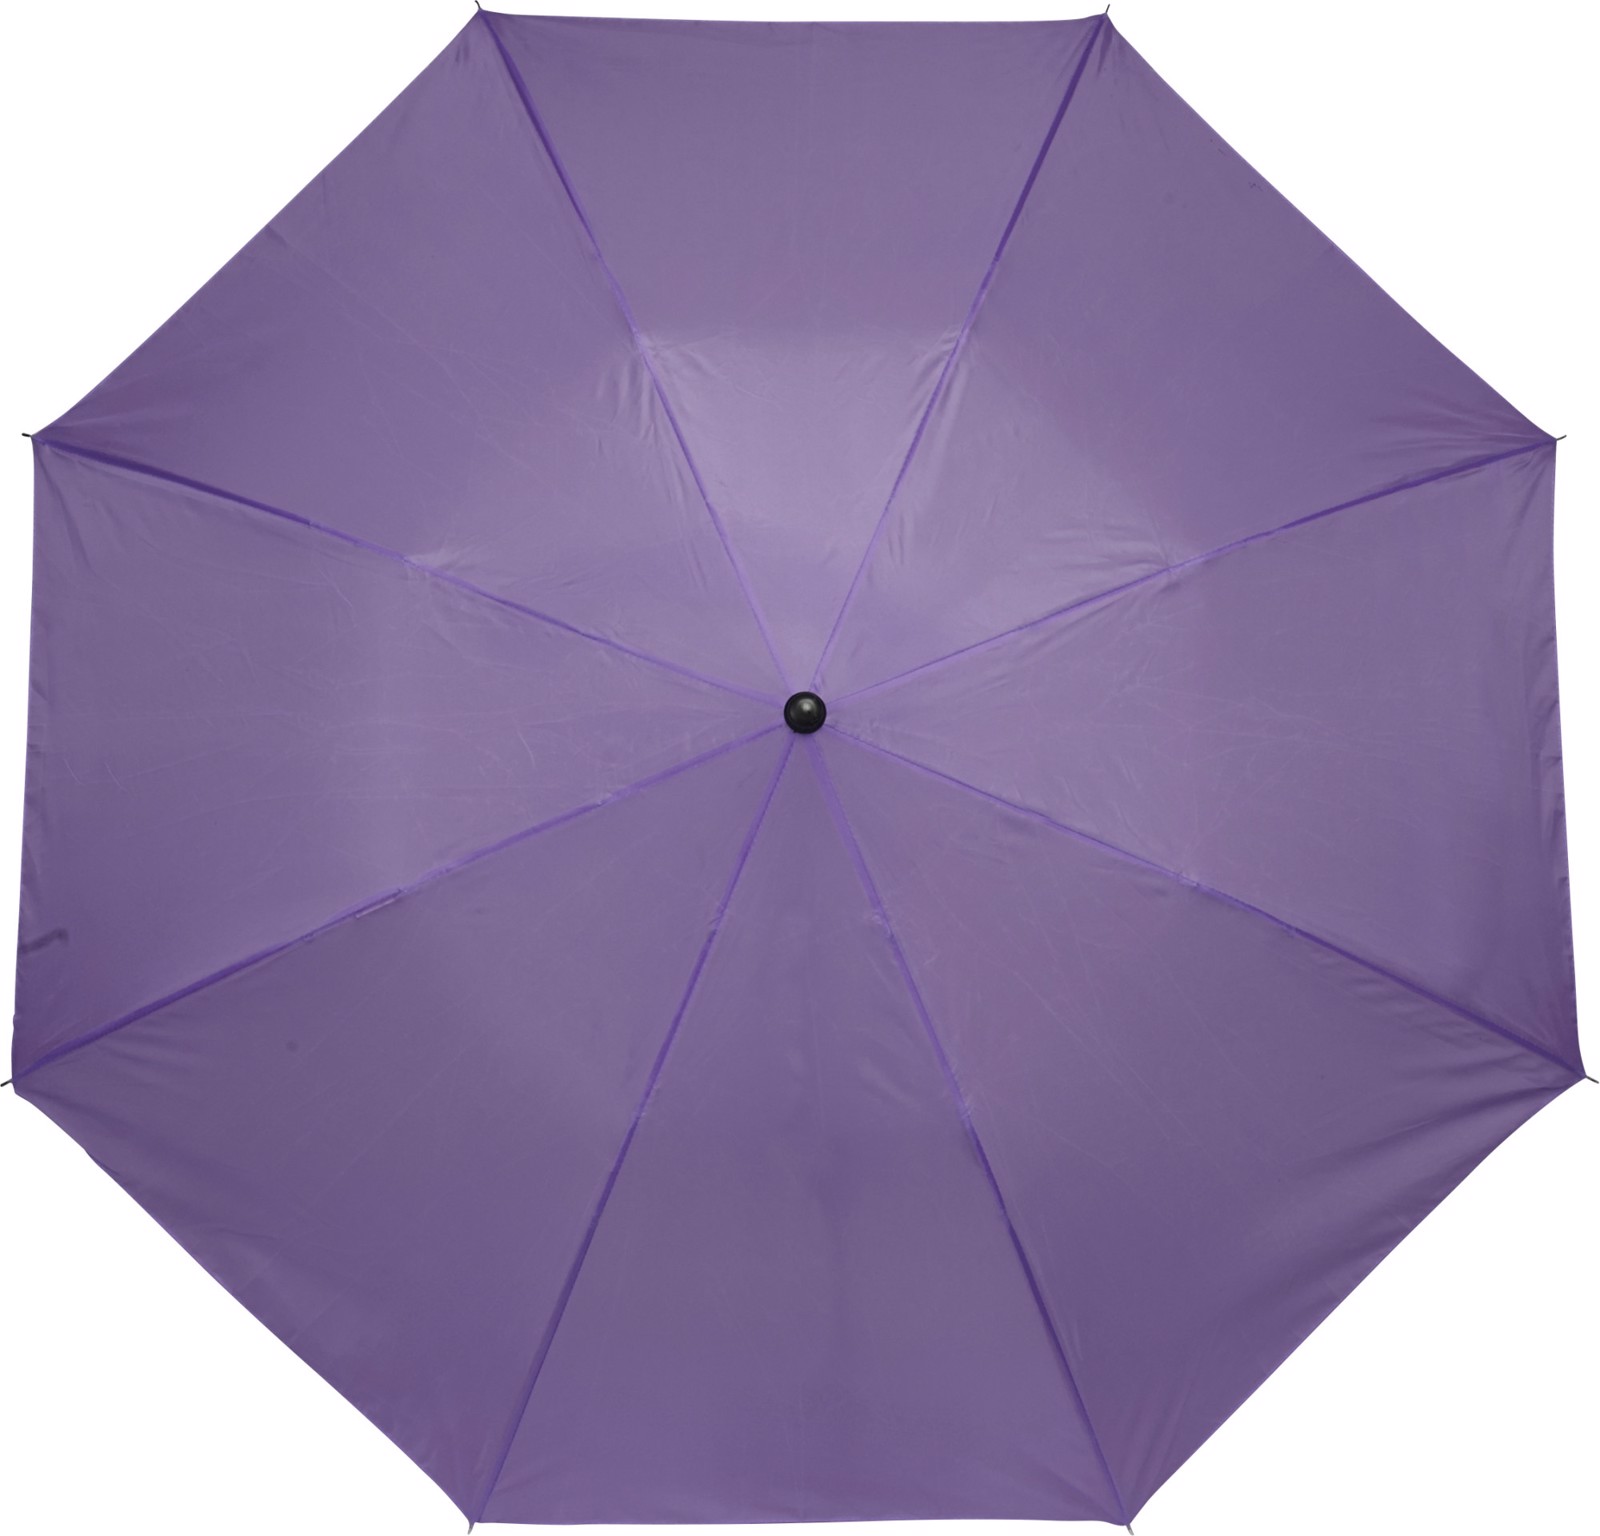 Polyester (190T) umbrella - Purple